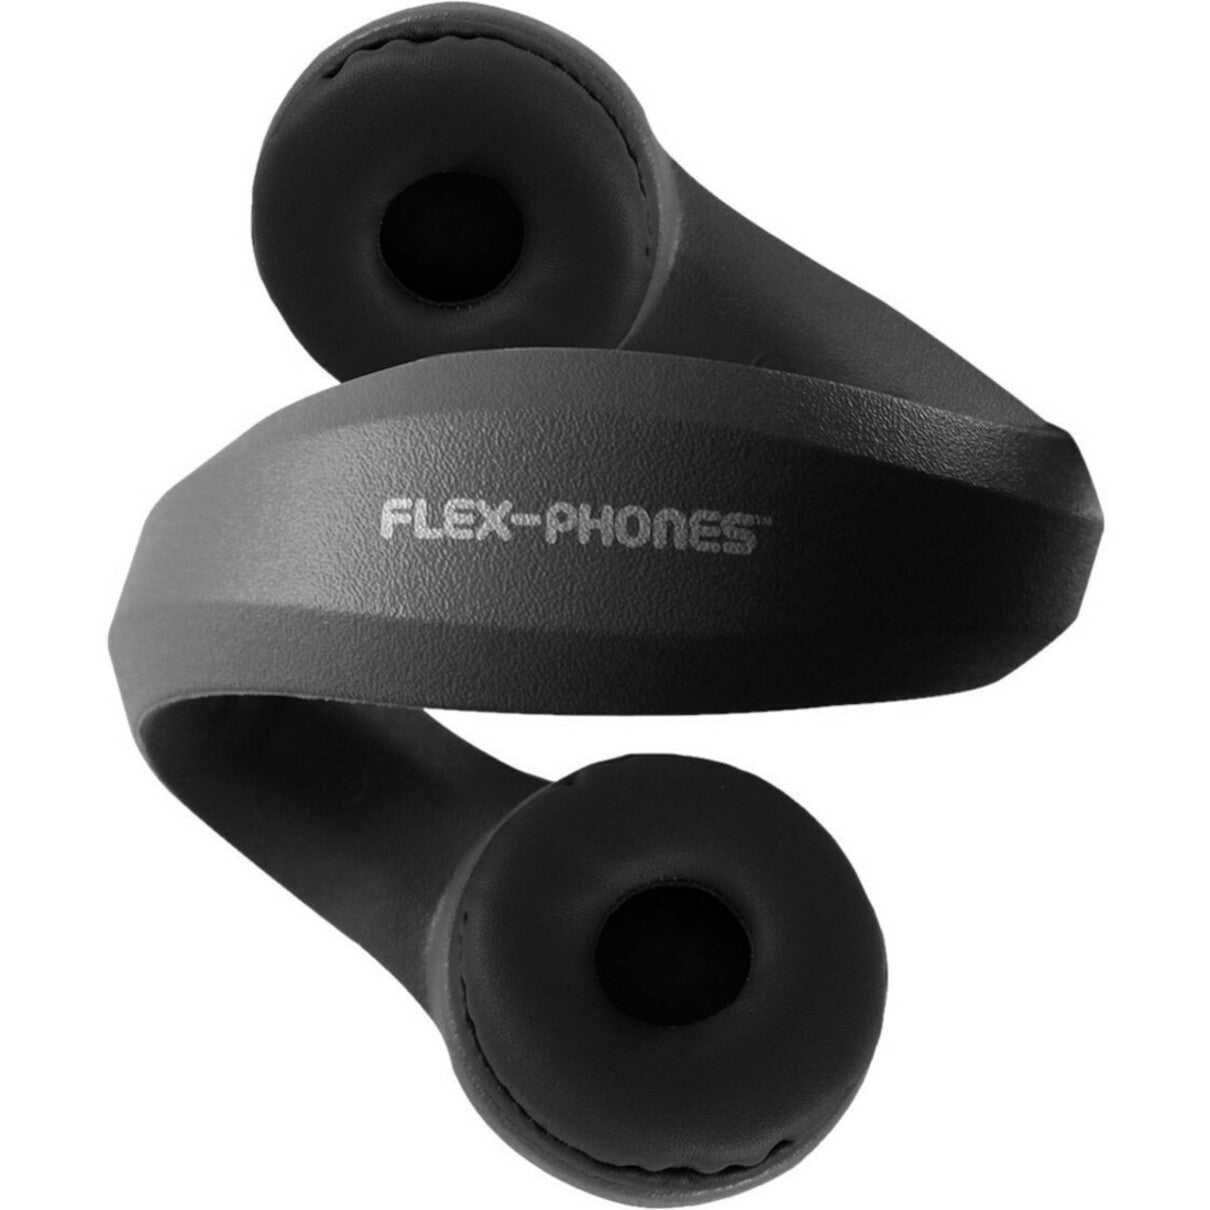 Hamilton Buhl KFX2-BLK Kid's Flex-Phones TRRS Headset With Gooseneck Microphone - BLACK, Durable, Noise Cancelling, Home Use